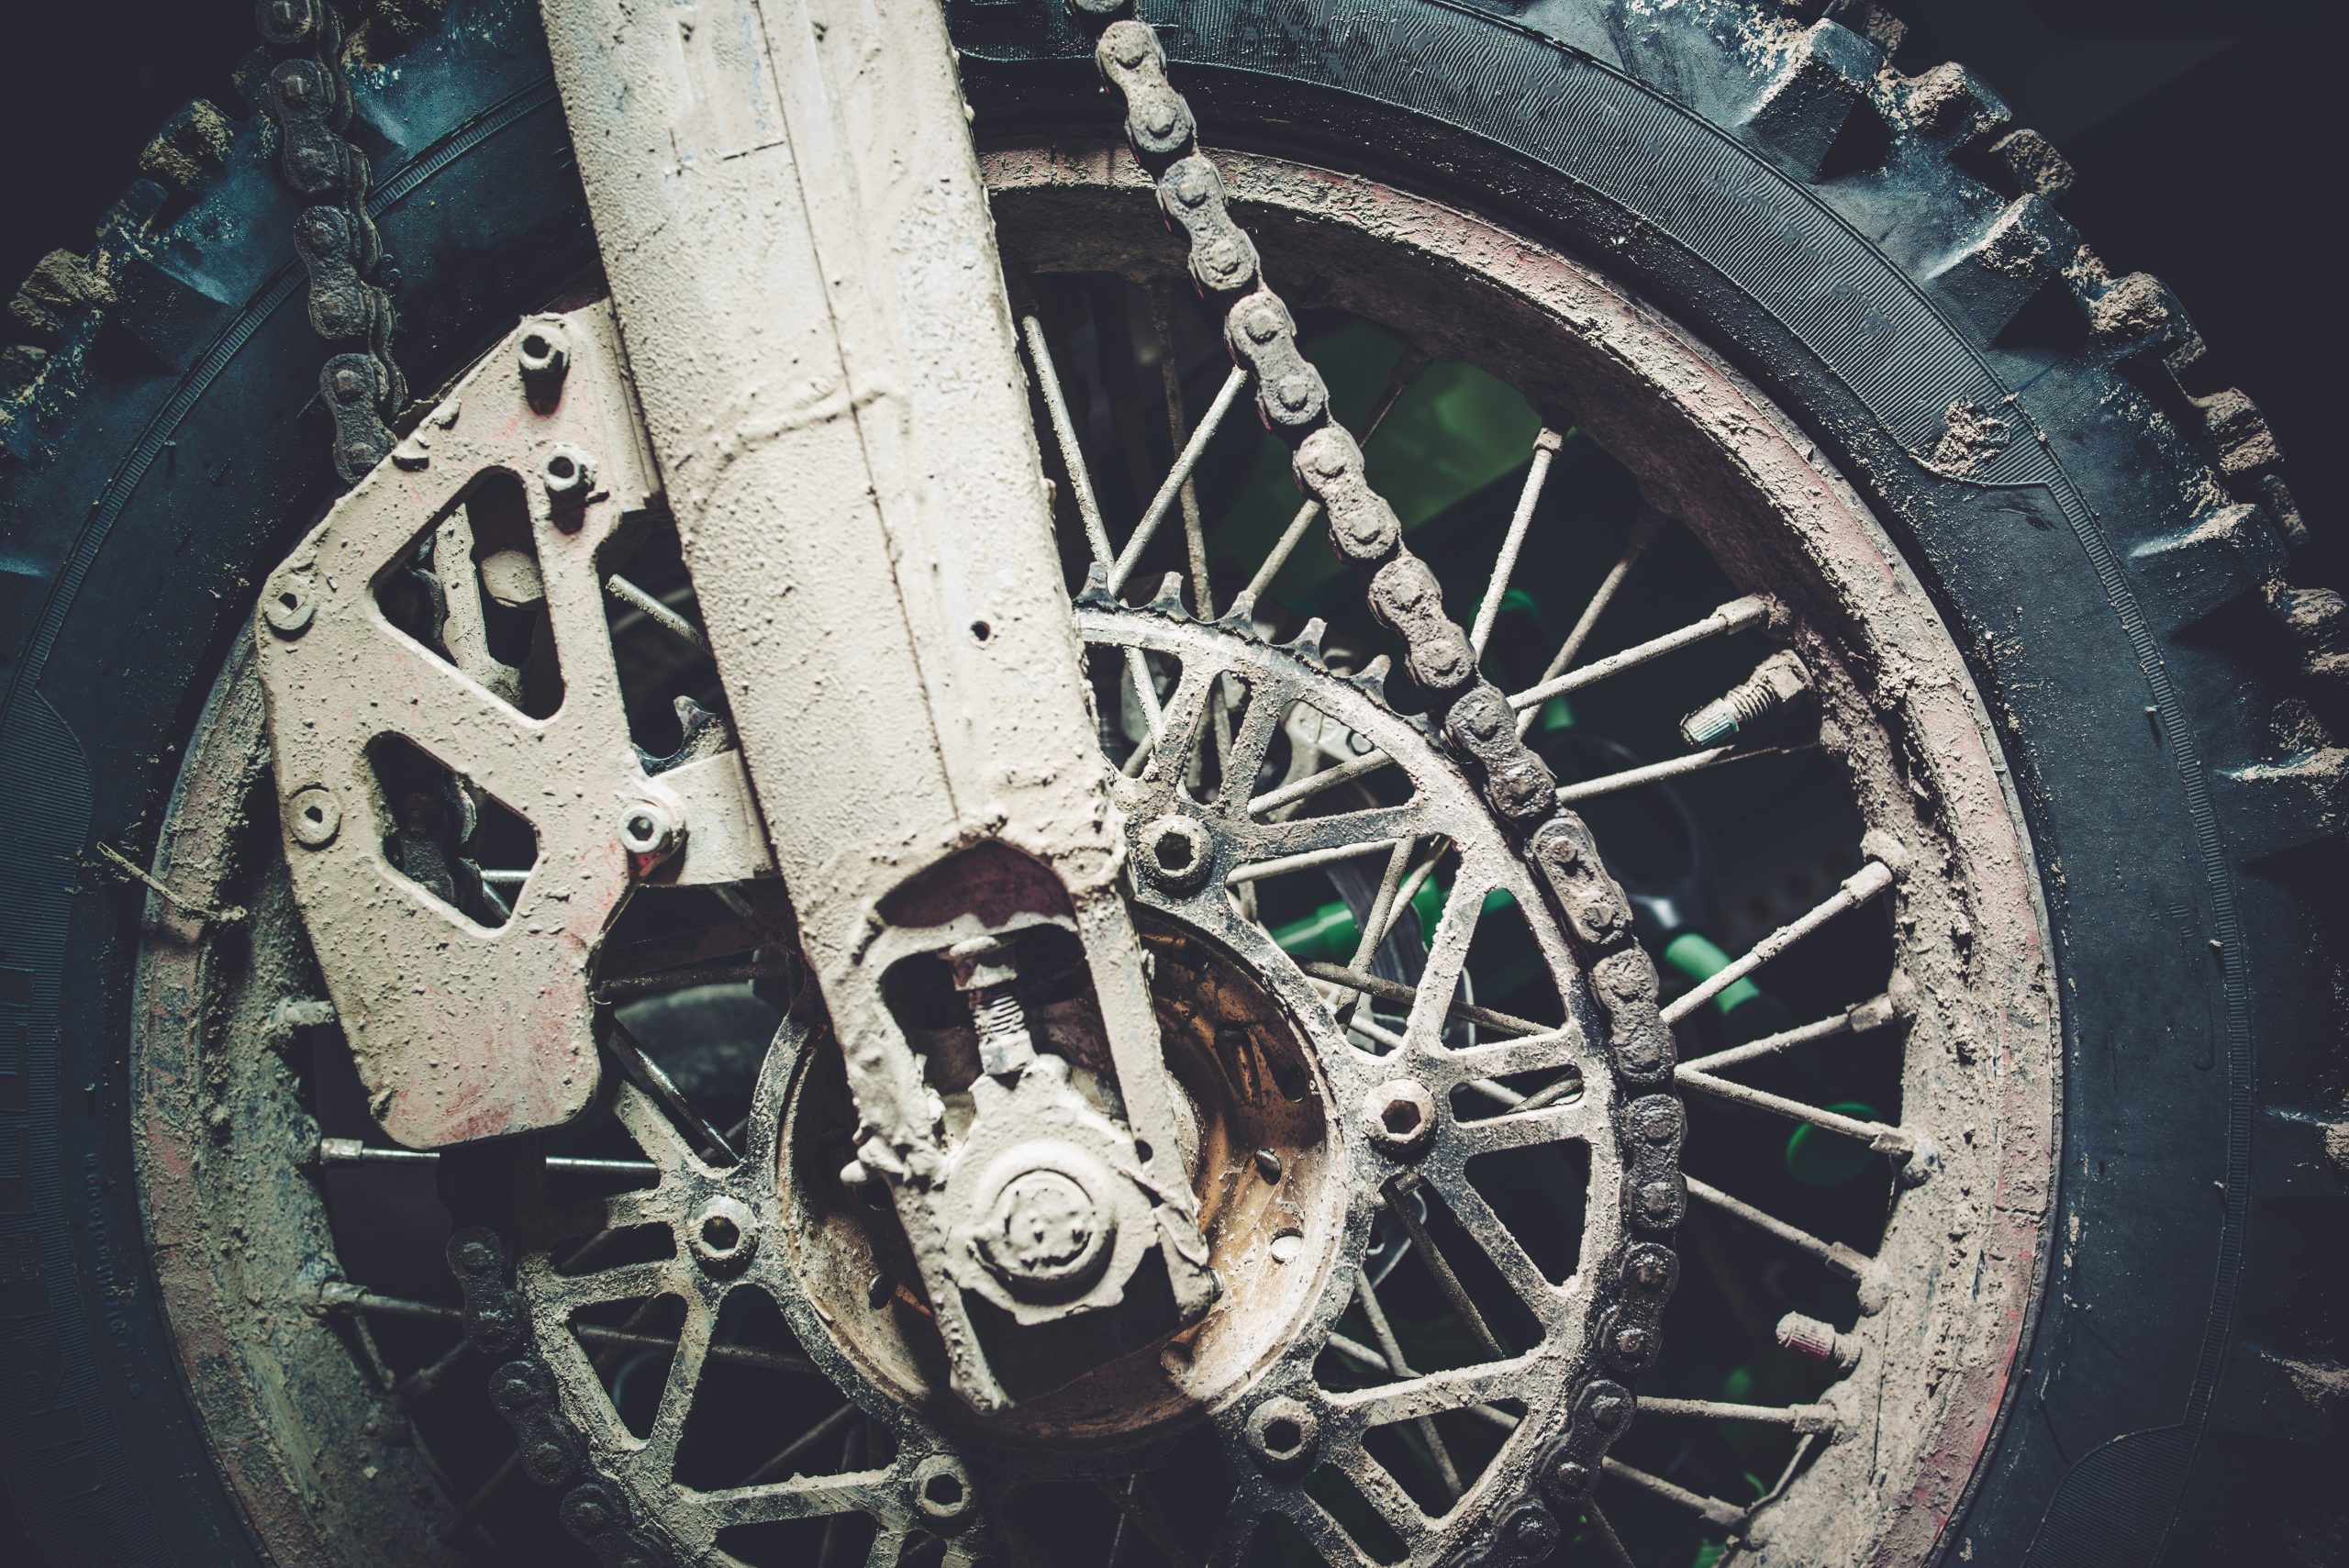 dirty-motocross-bike-wheel-2021-08-26-23-04-30-utc